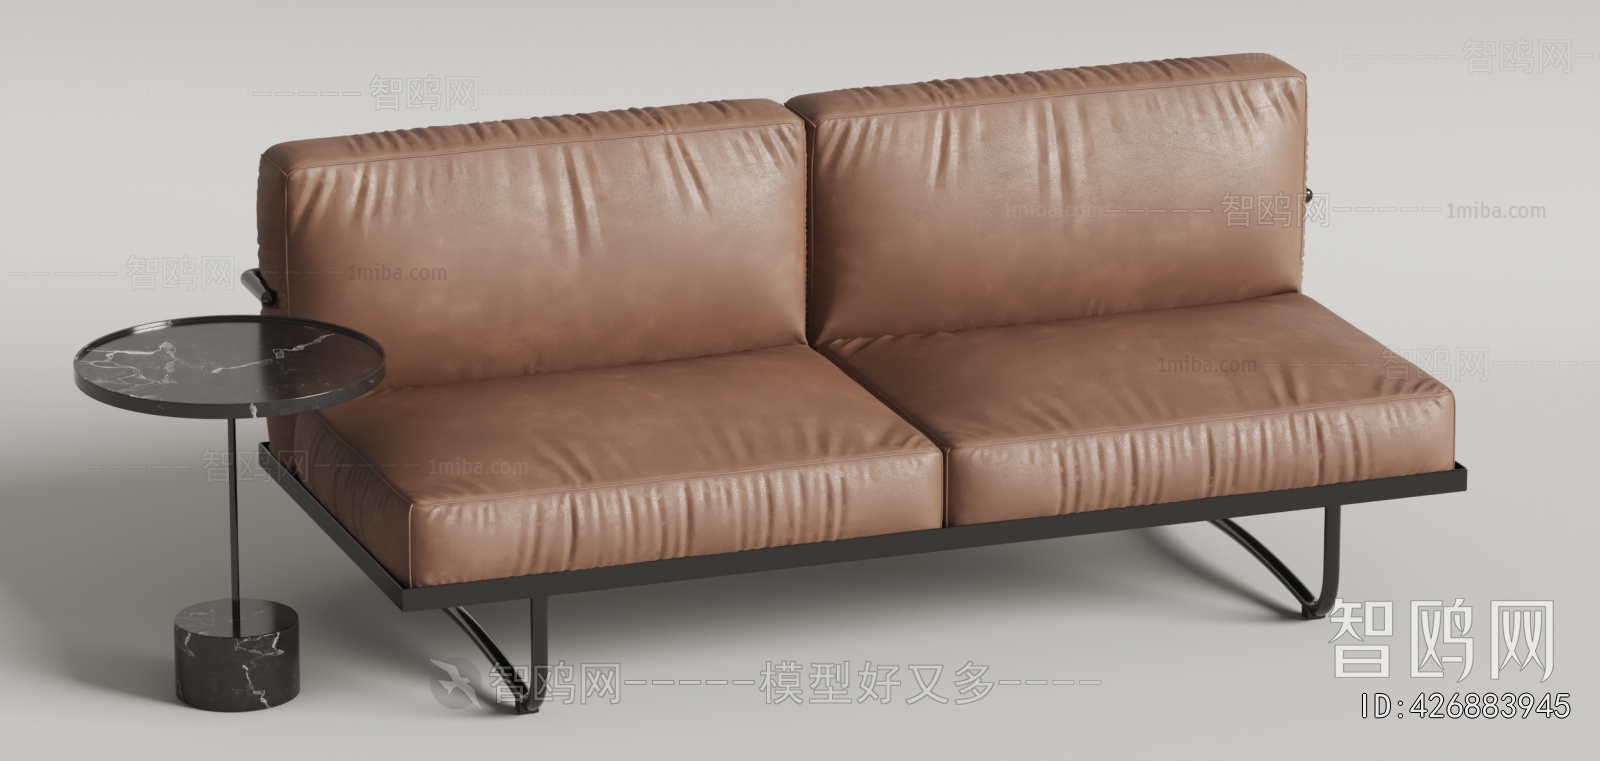 Asiades 现代双人沙发3D模型下载